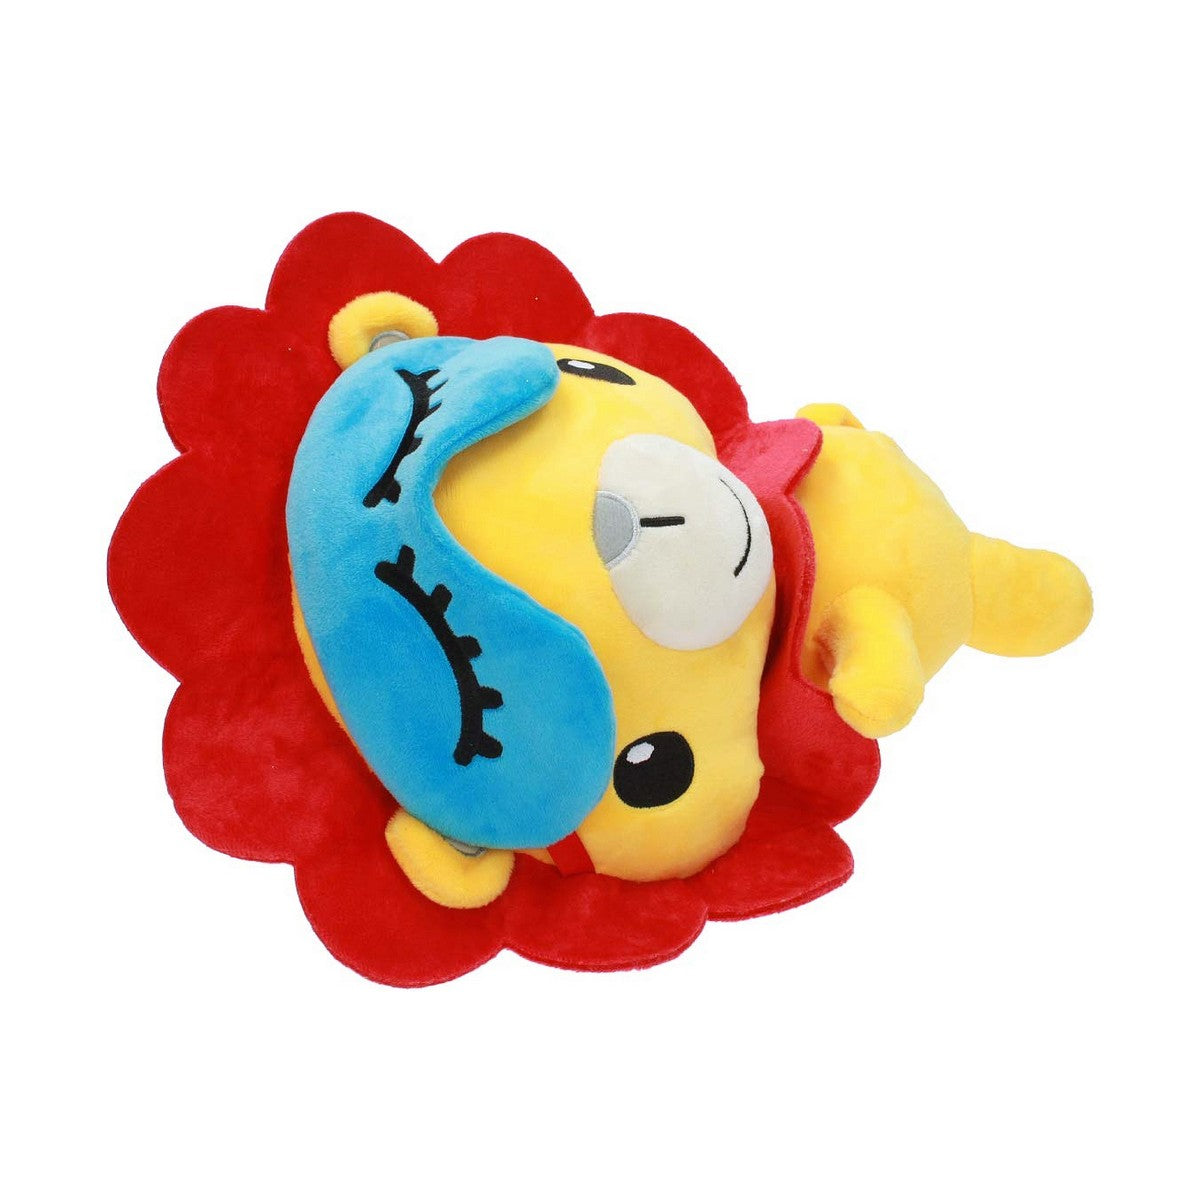 REIG Nap-Time! Lyon Infant & Toddler Plush Toy